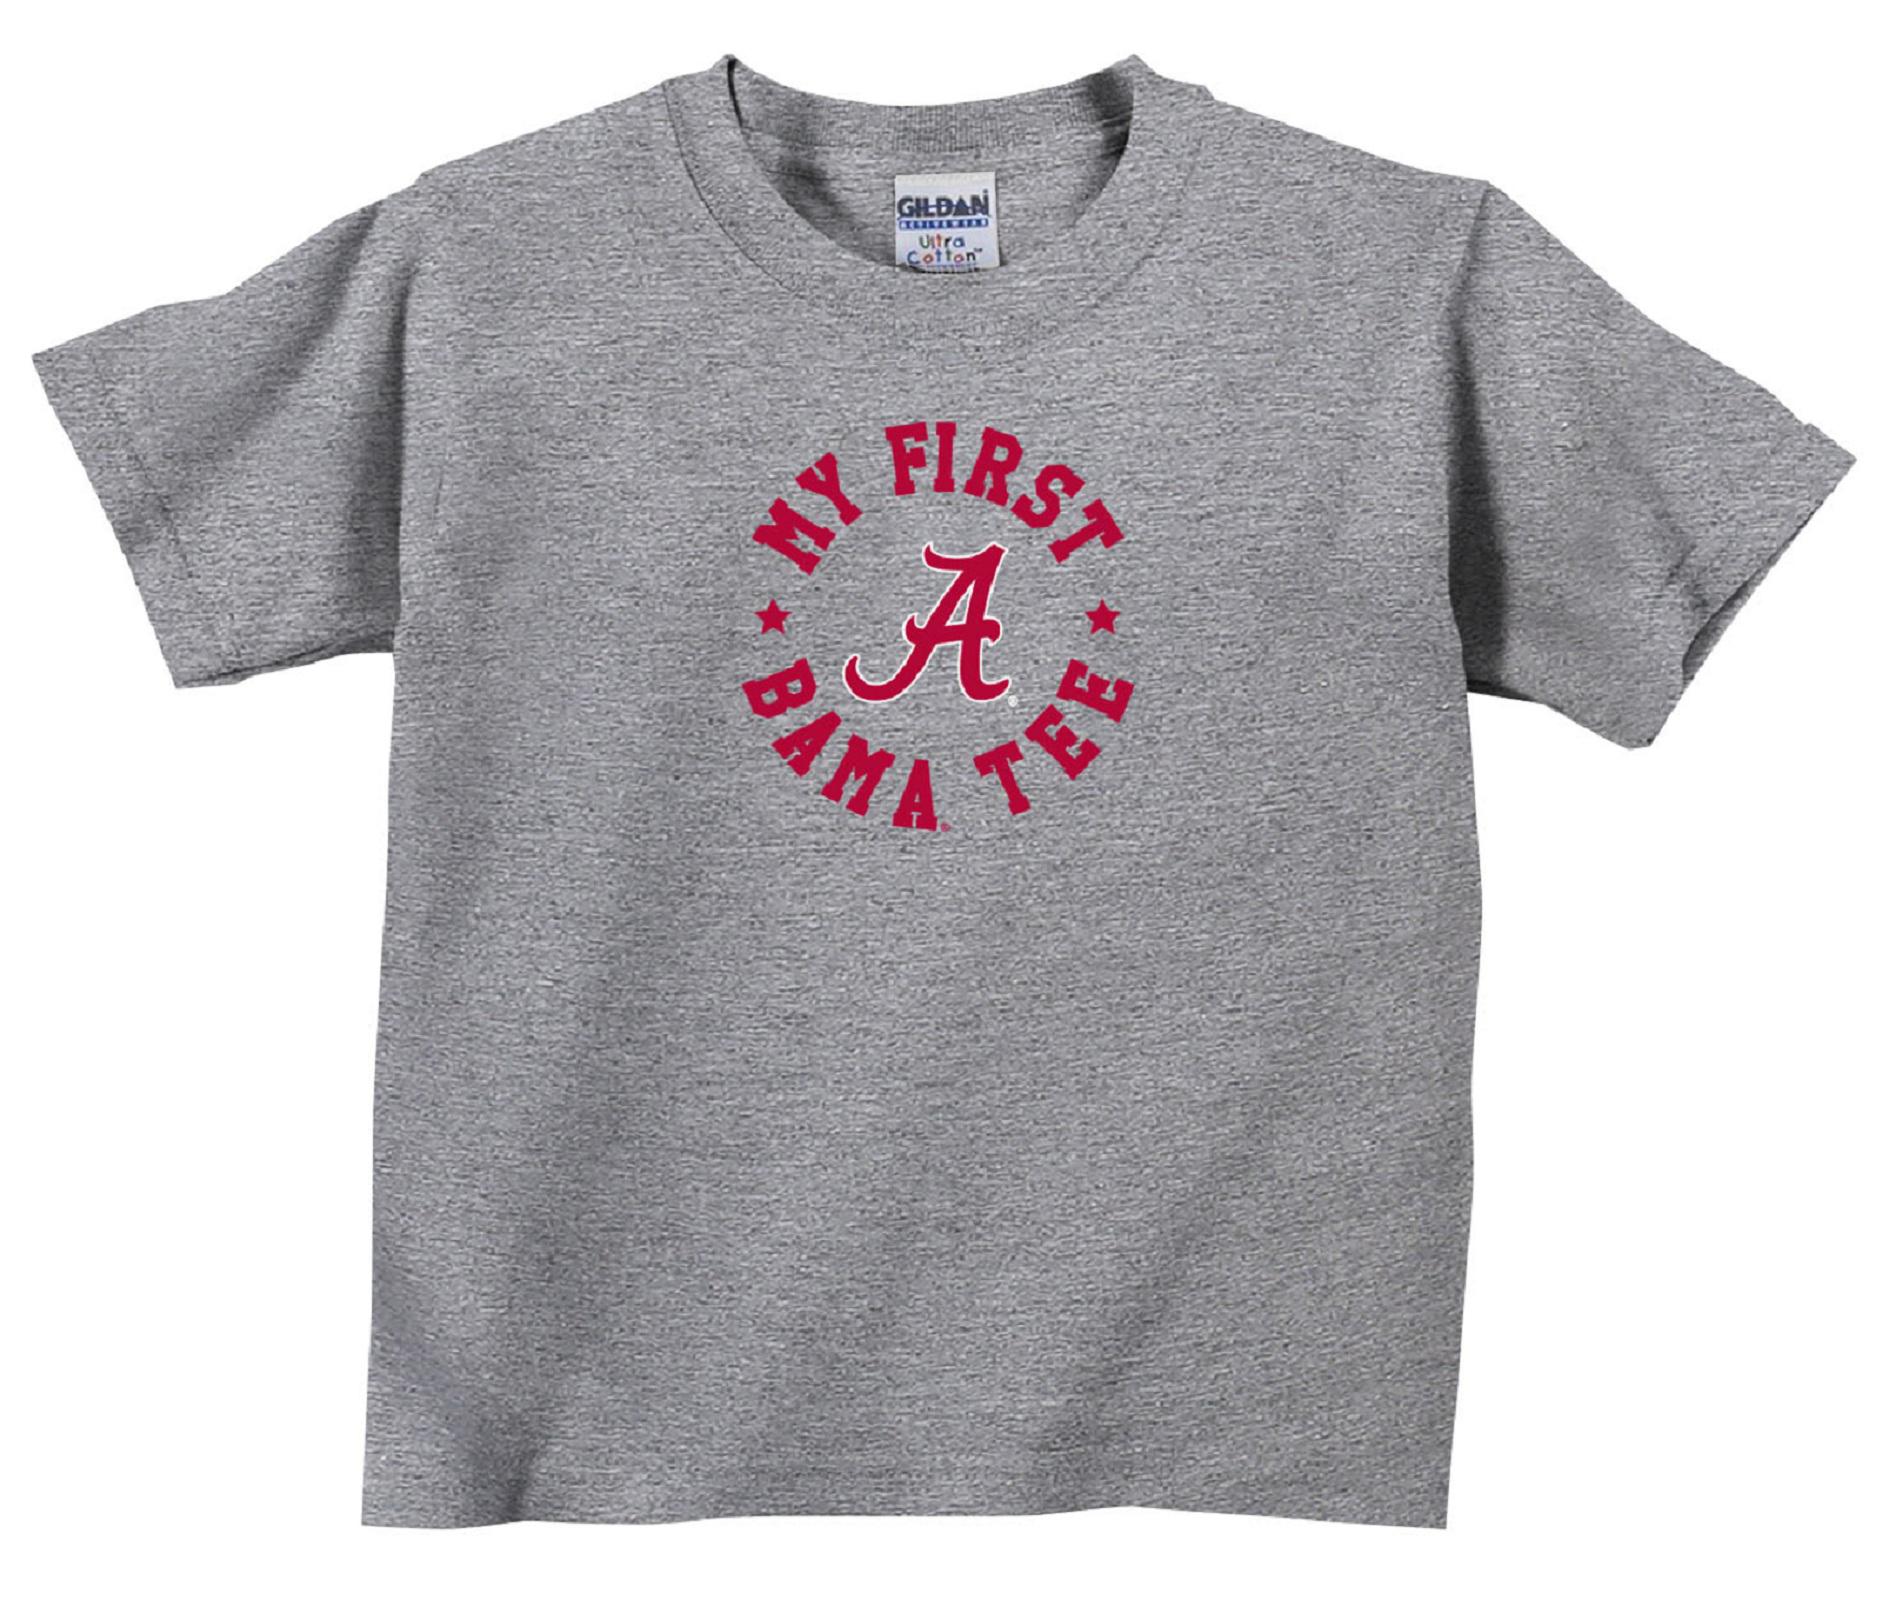 NCAA Toddler Boys' Heathered T-Shirt - Alabama Crimson Tide